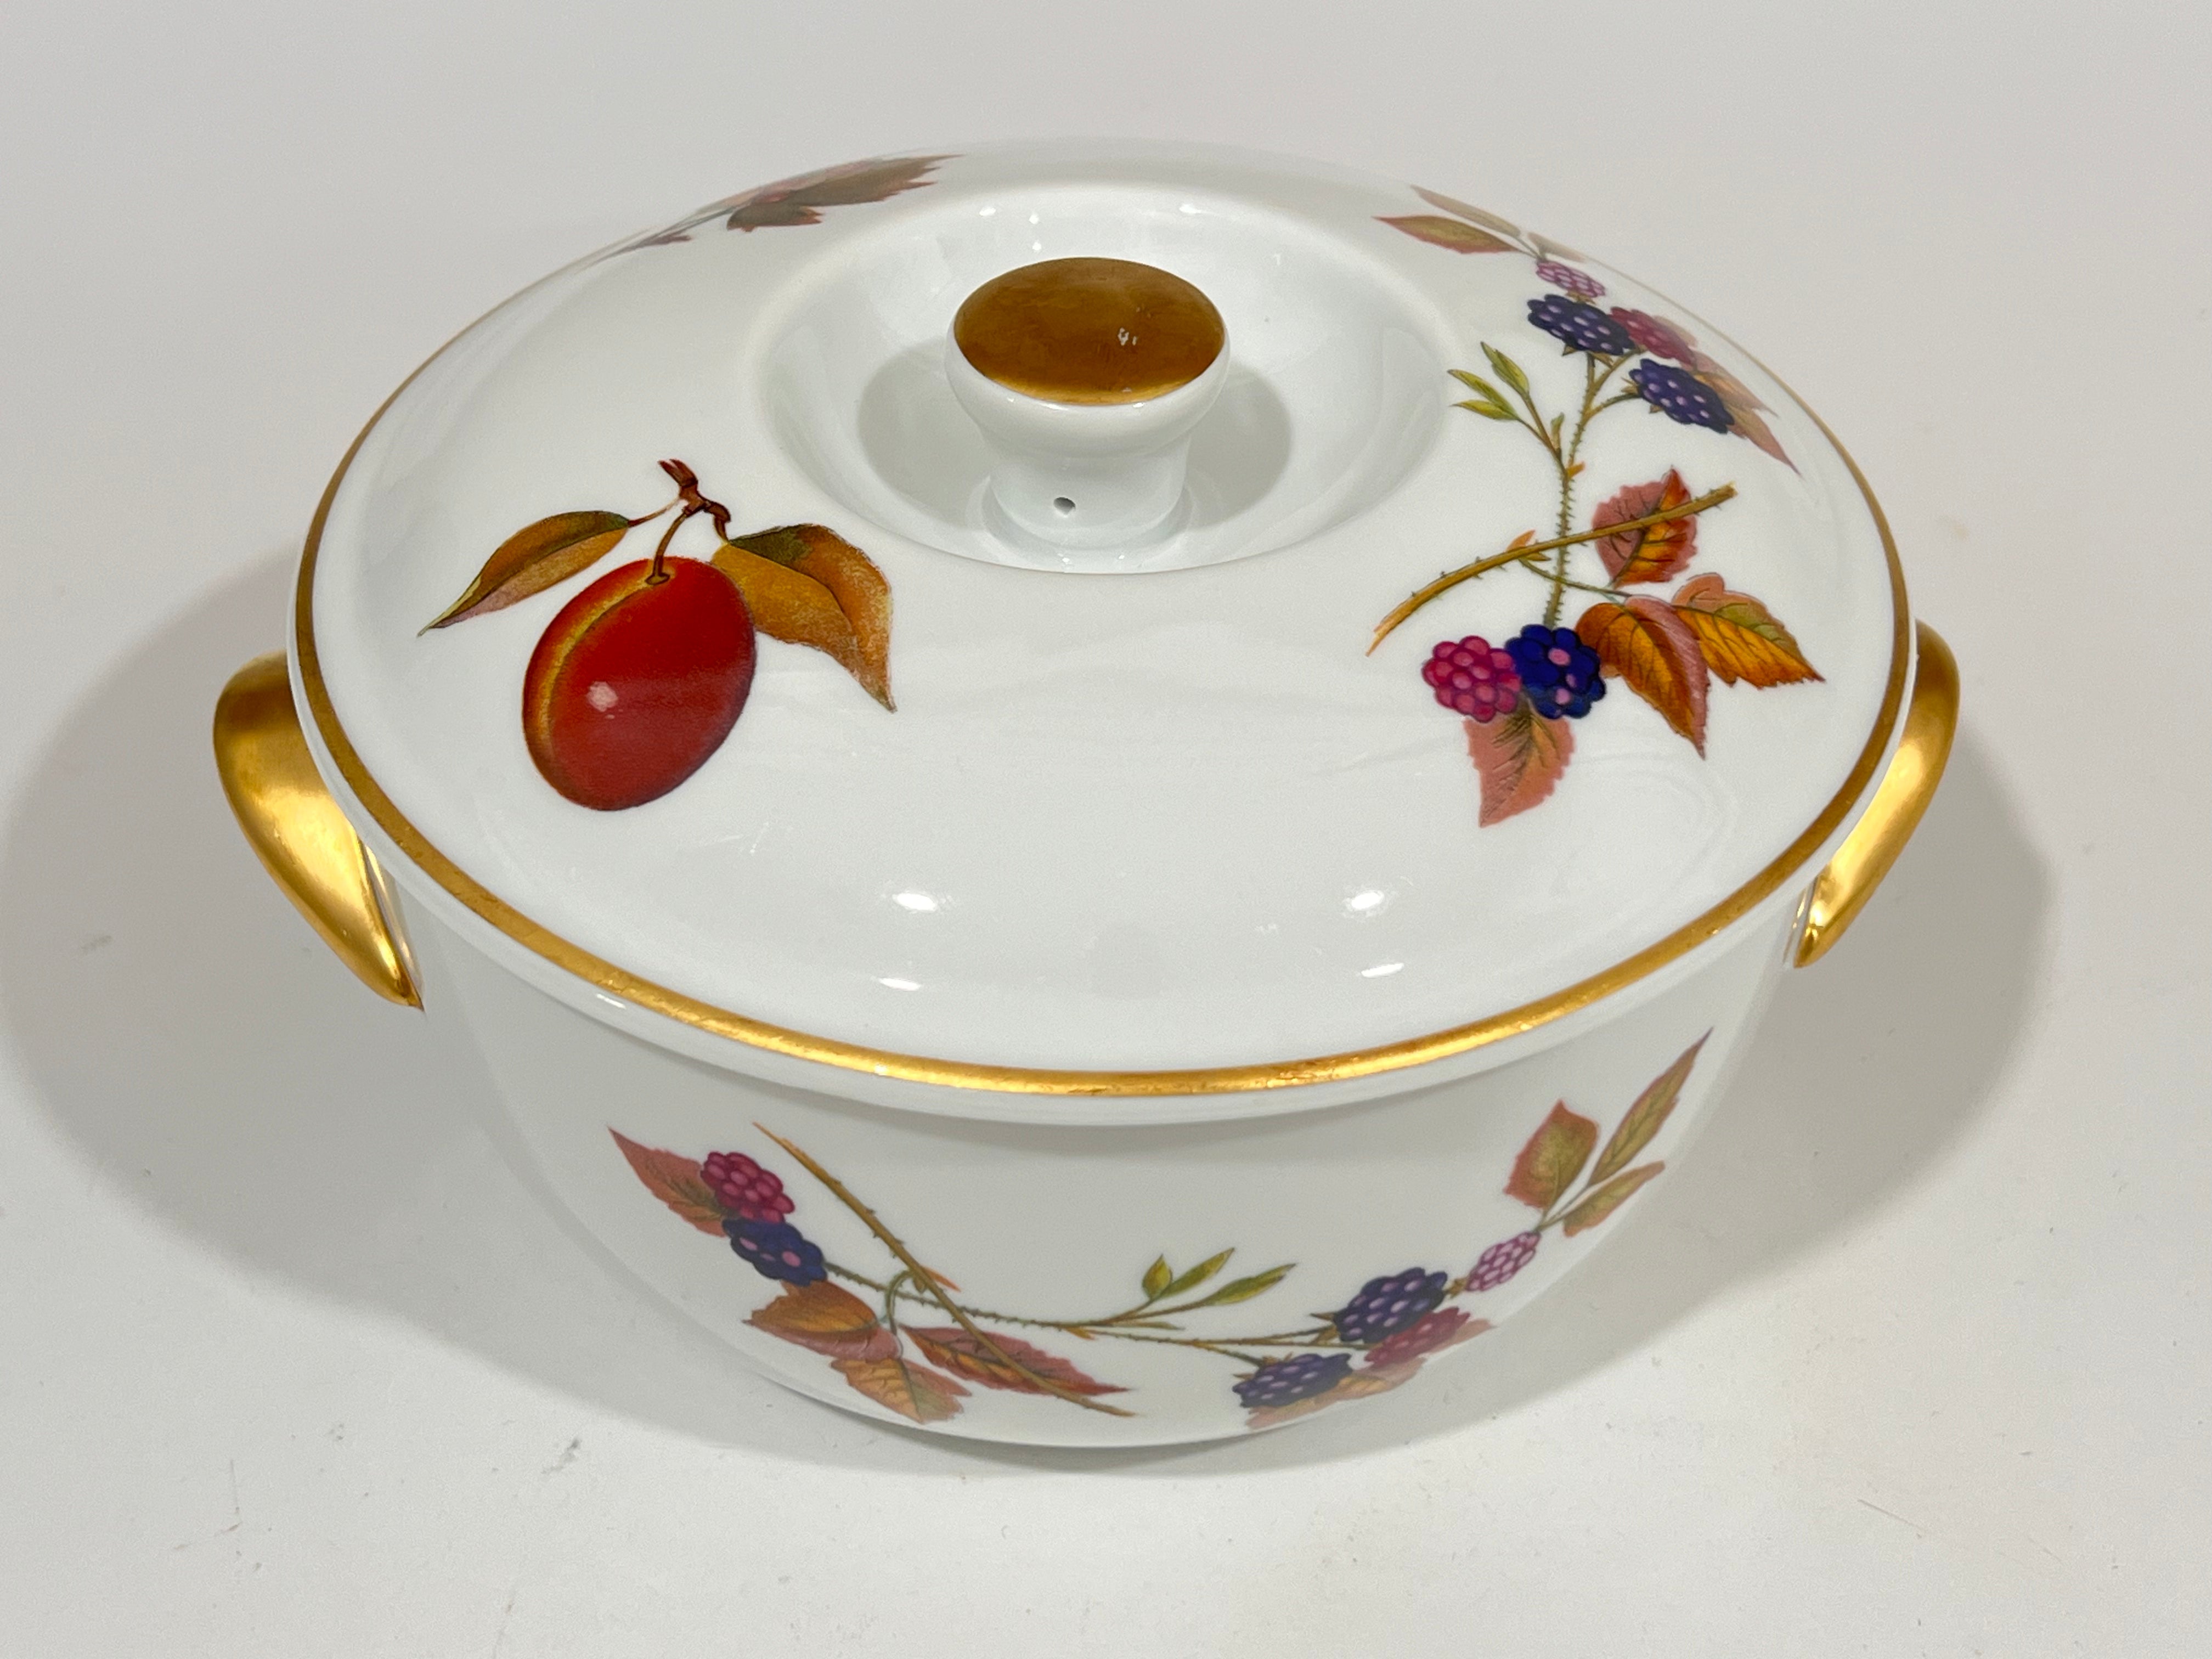 Royal Worcester Evesham Original Porcelain Fine China - Big Serveware With Lid - Gold Trim - From England